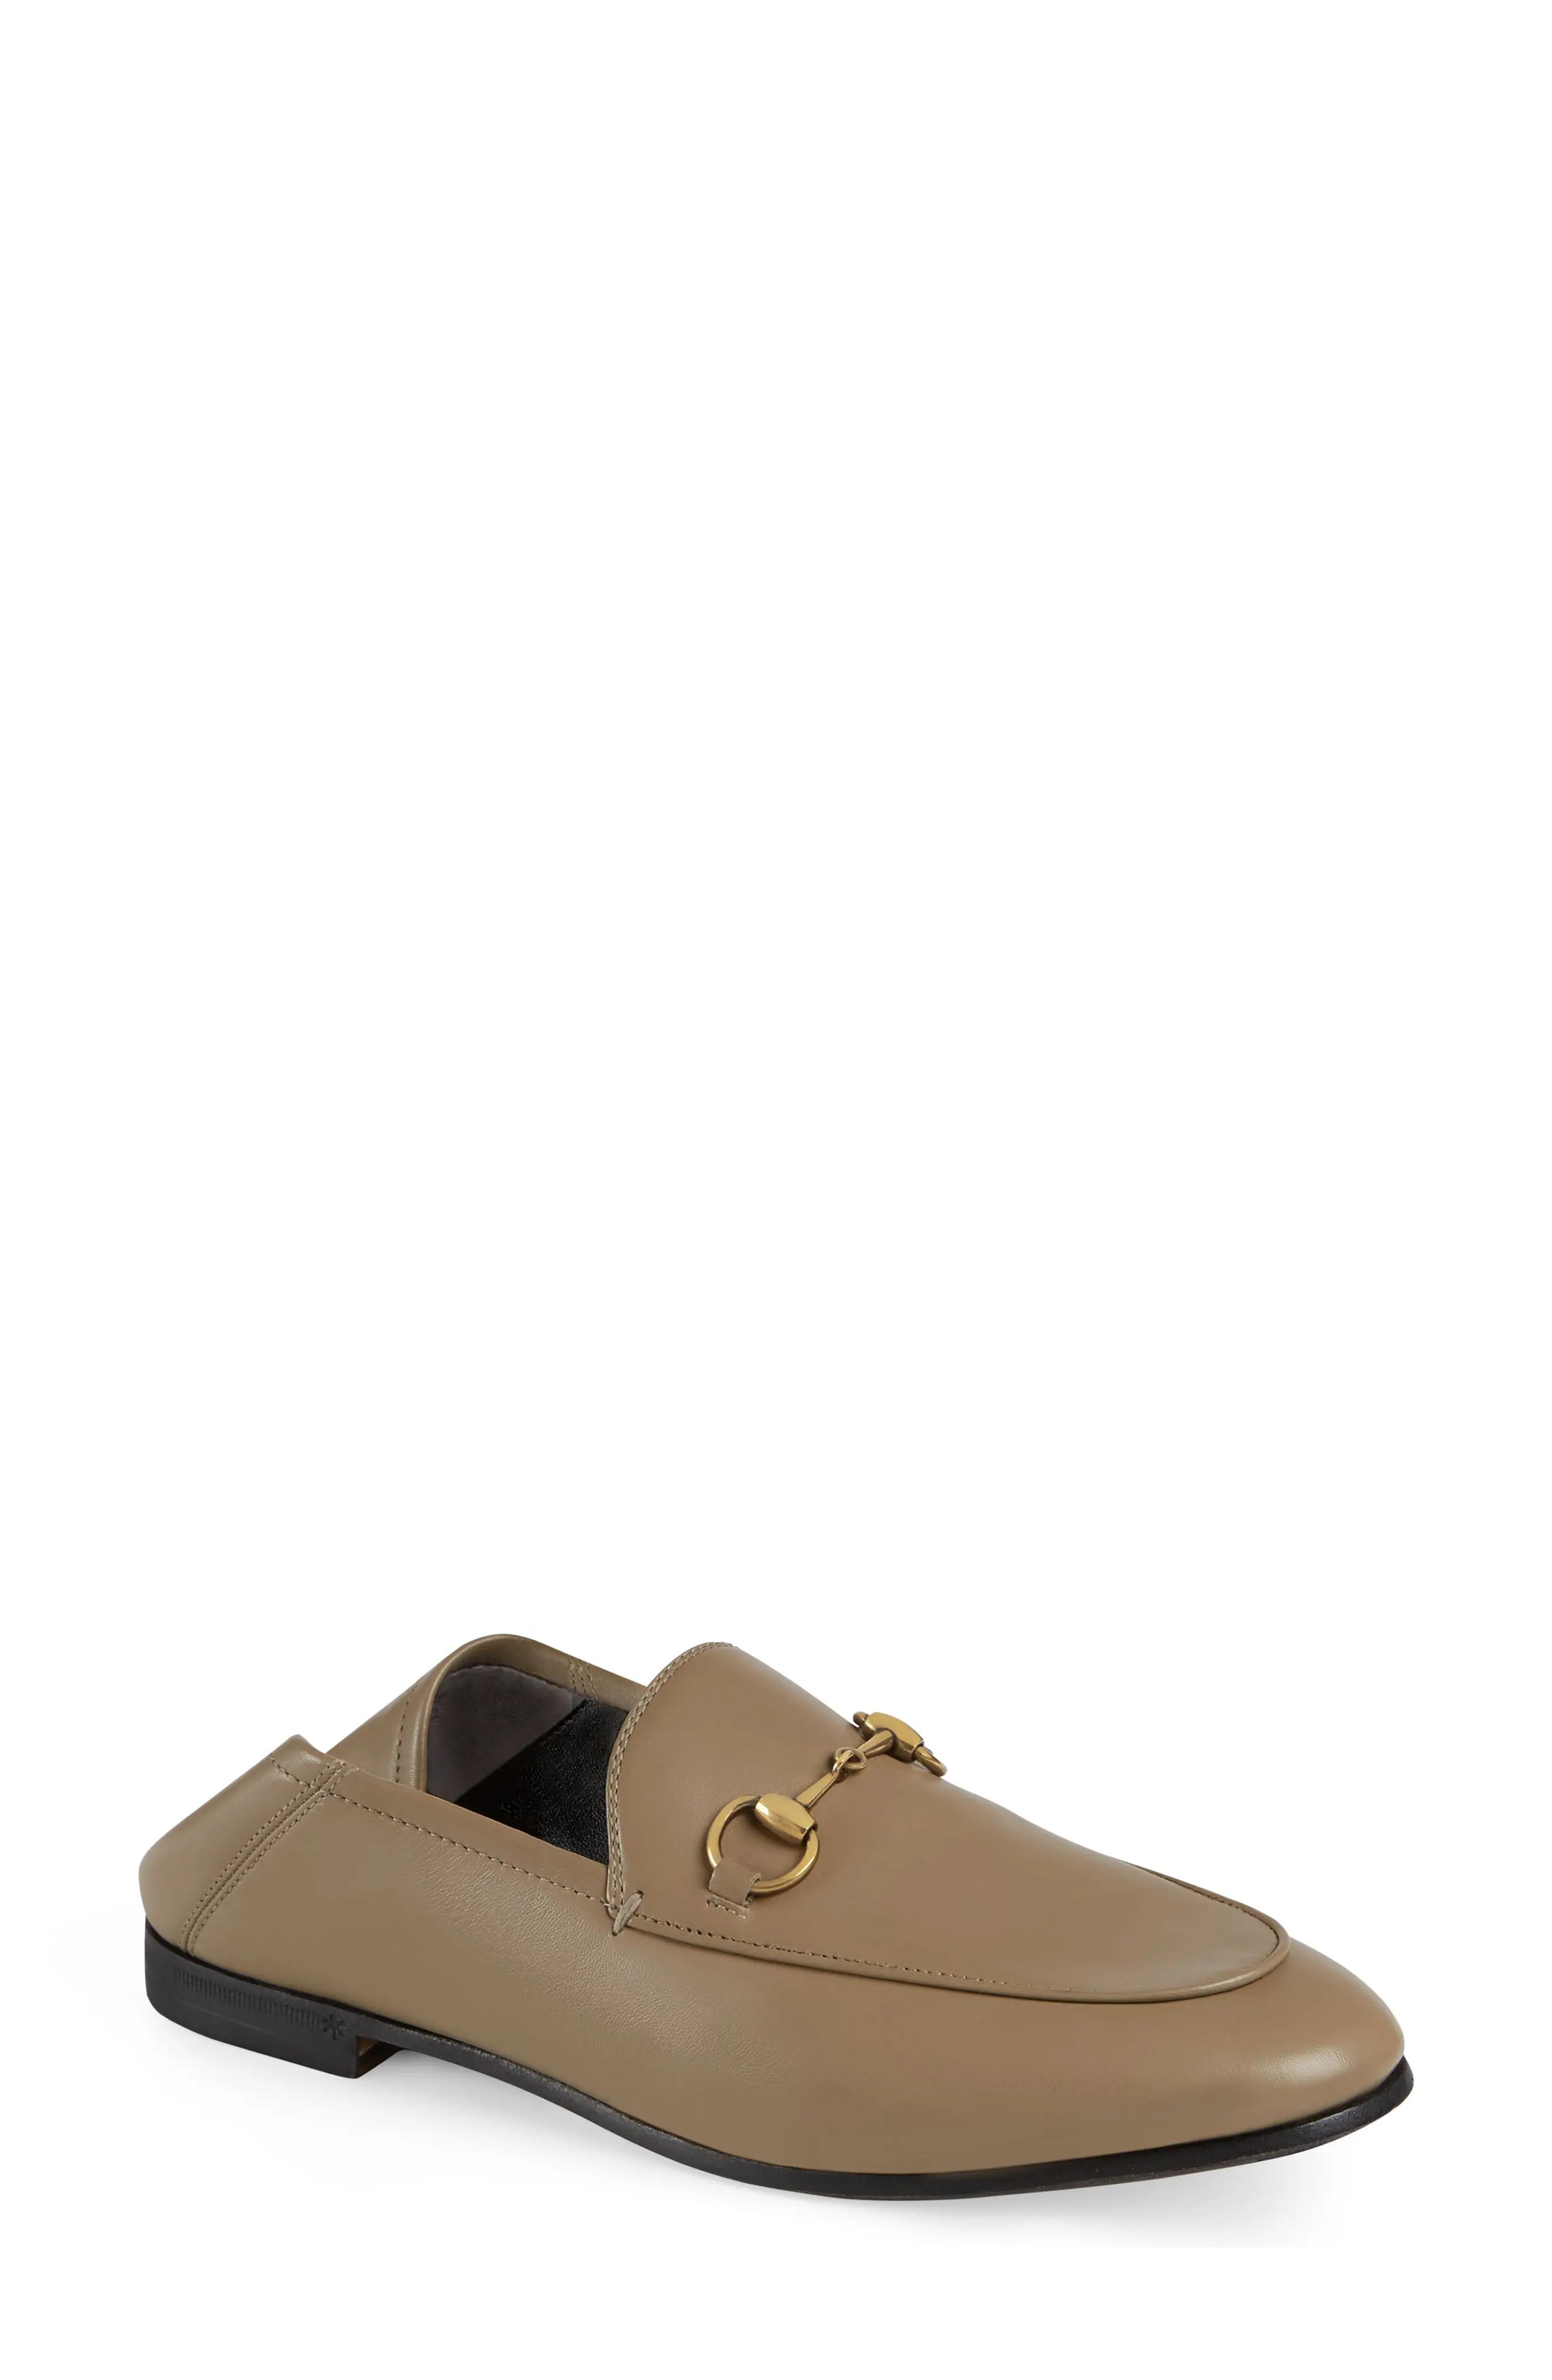 Women's Gucci Brixton Bit Convertible Loafer, Size 6US / 36EU - Beige | Nordstrom